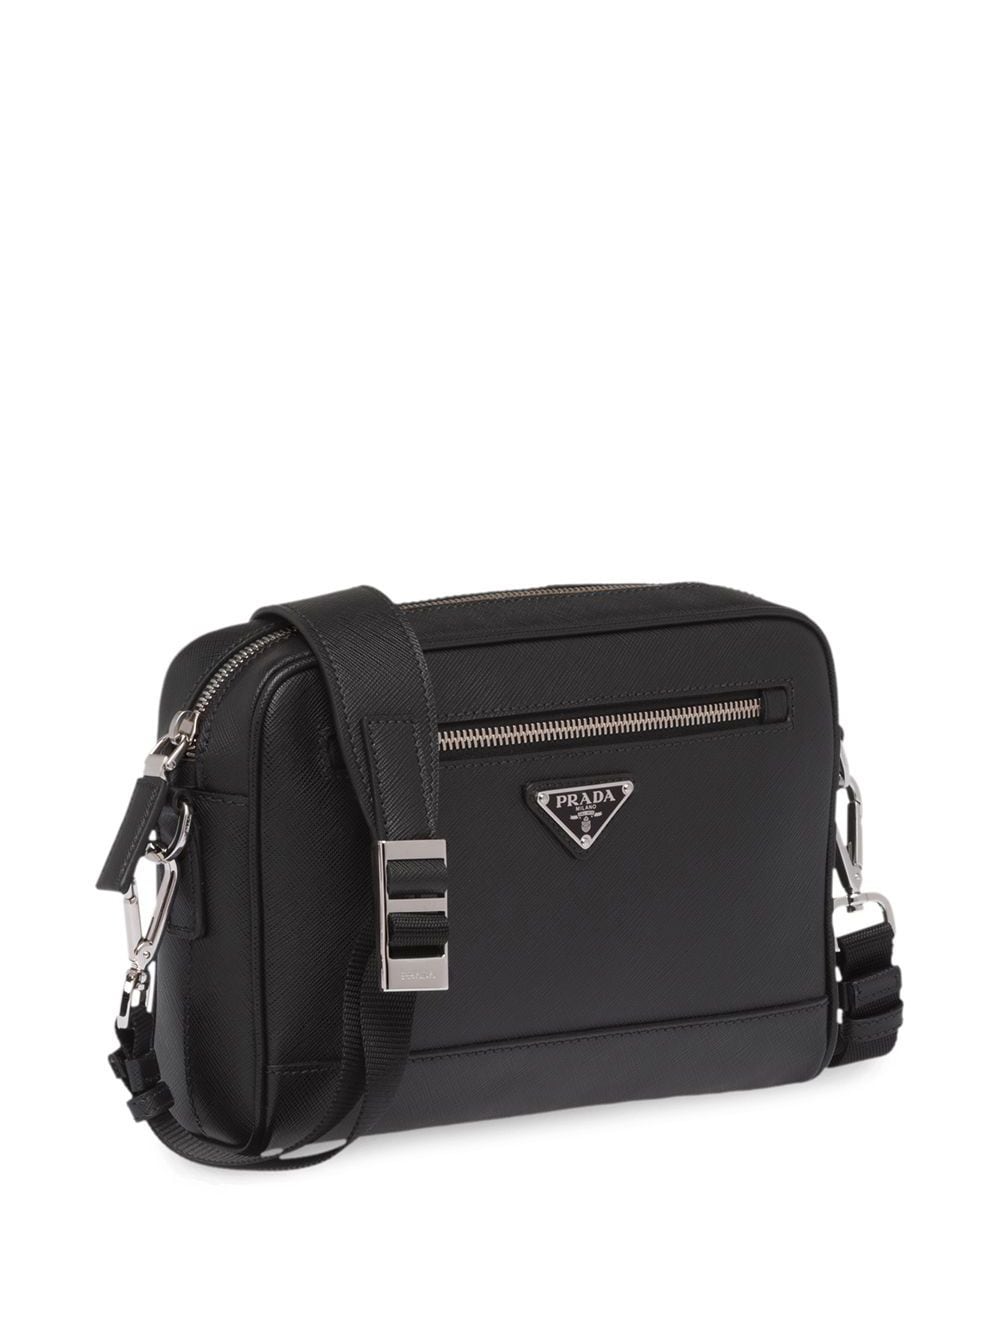 Shop Prada Saffiano leather shoulder bag with Express Delivery - FARFETCH